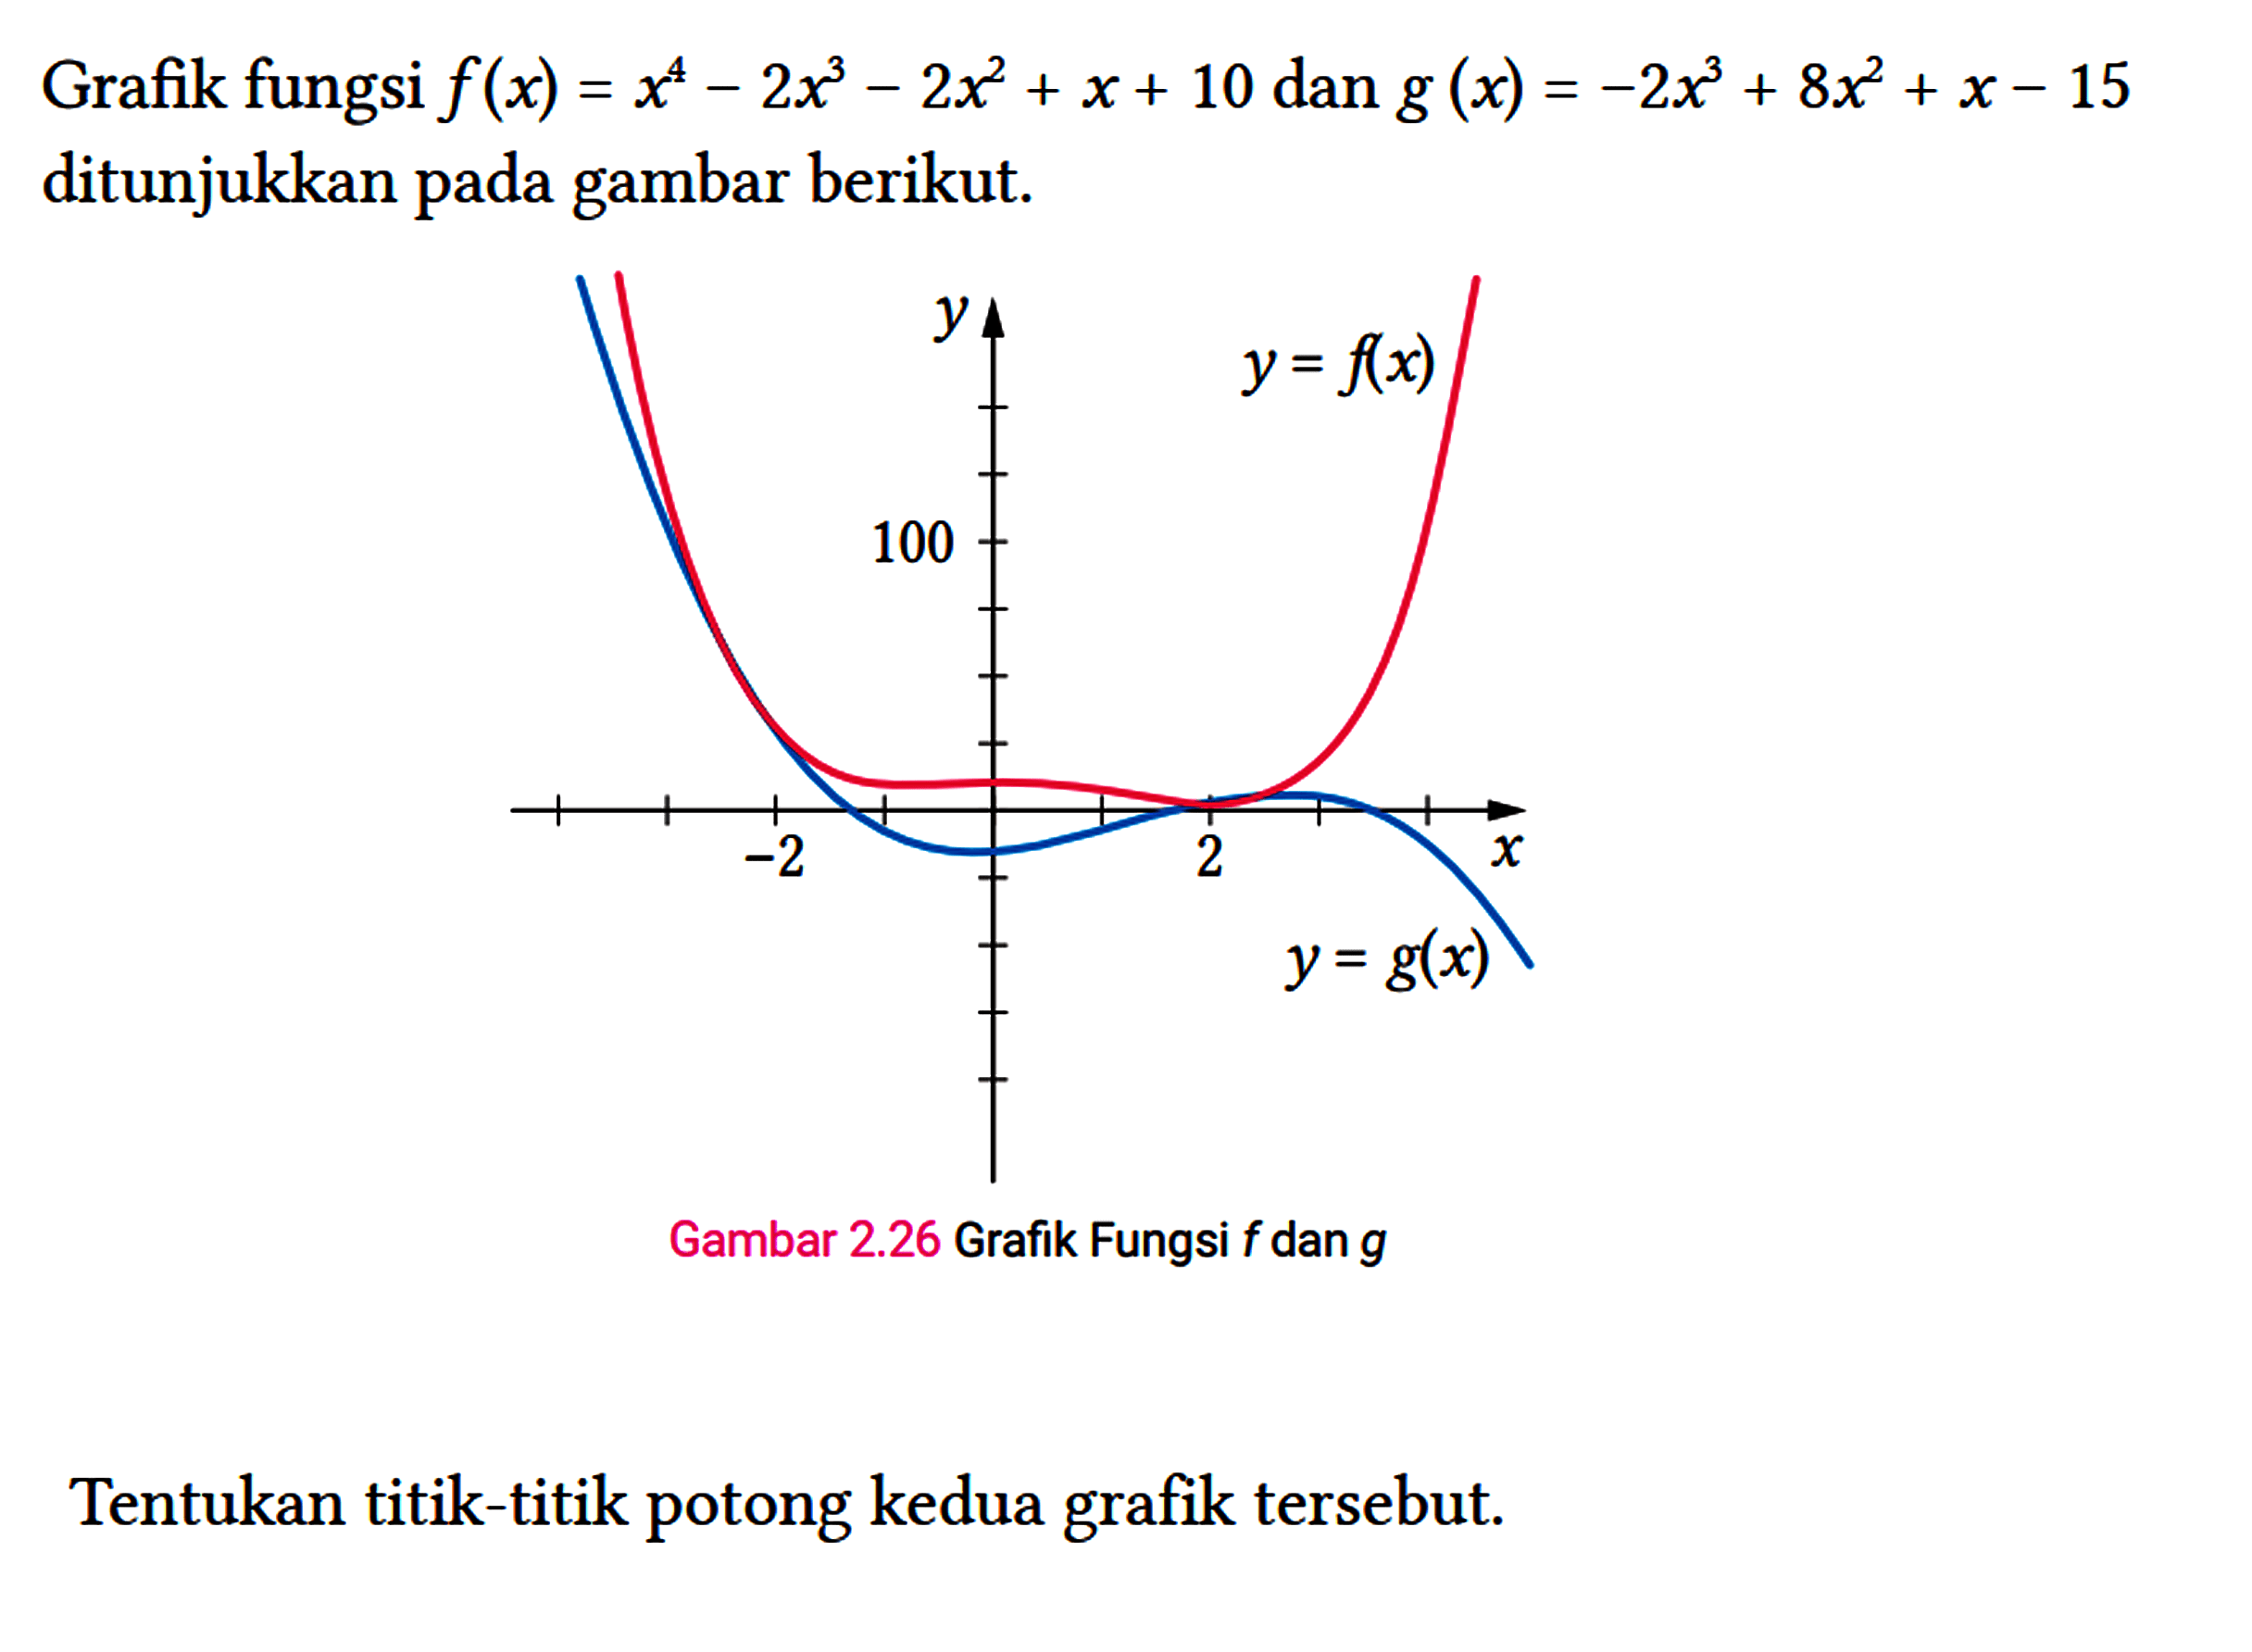 Grafik fungsi f(x)=x^(4)-2 x^(3)-2 x^(2)+x+10 dan g(x)=-2 x^(3)+8 x^(2)+x-15 ditunjukkan pada gambar berikut.
 Gambar 2.26 Grafik Fungsi f dan g 
 Tentukan titik-titik potong kedua grafik tersebut.